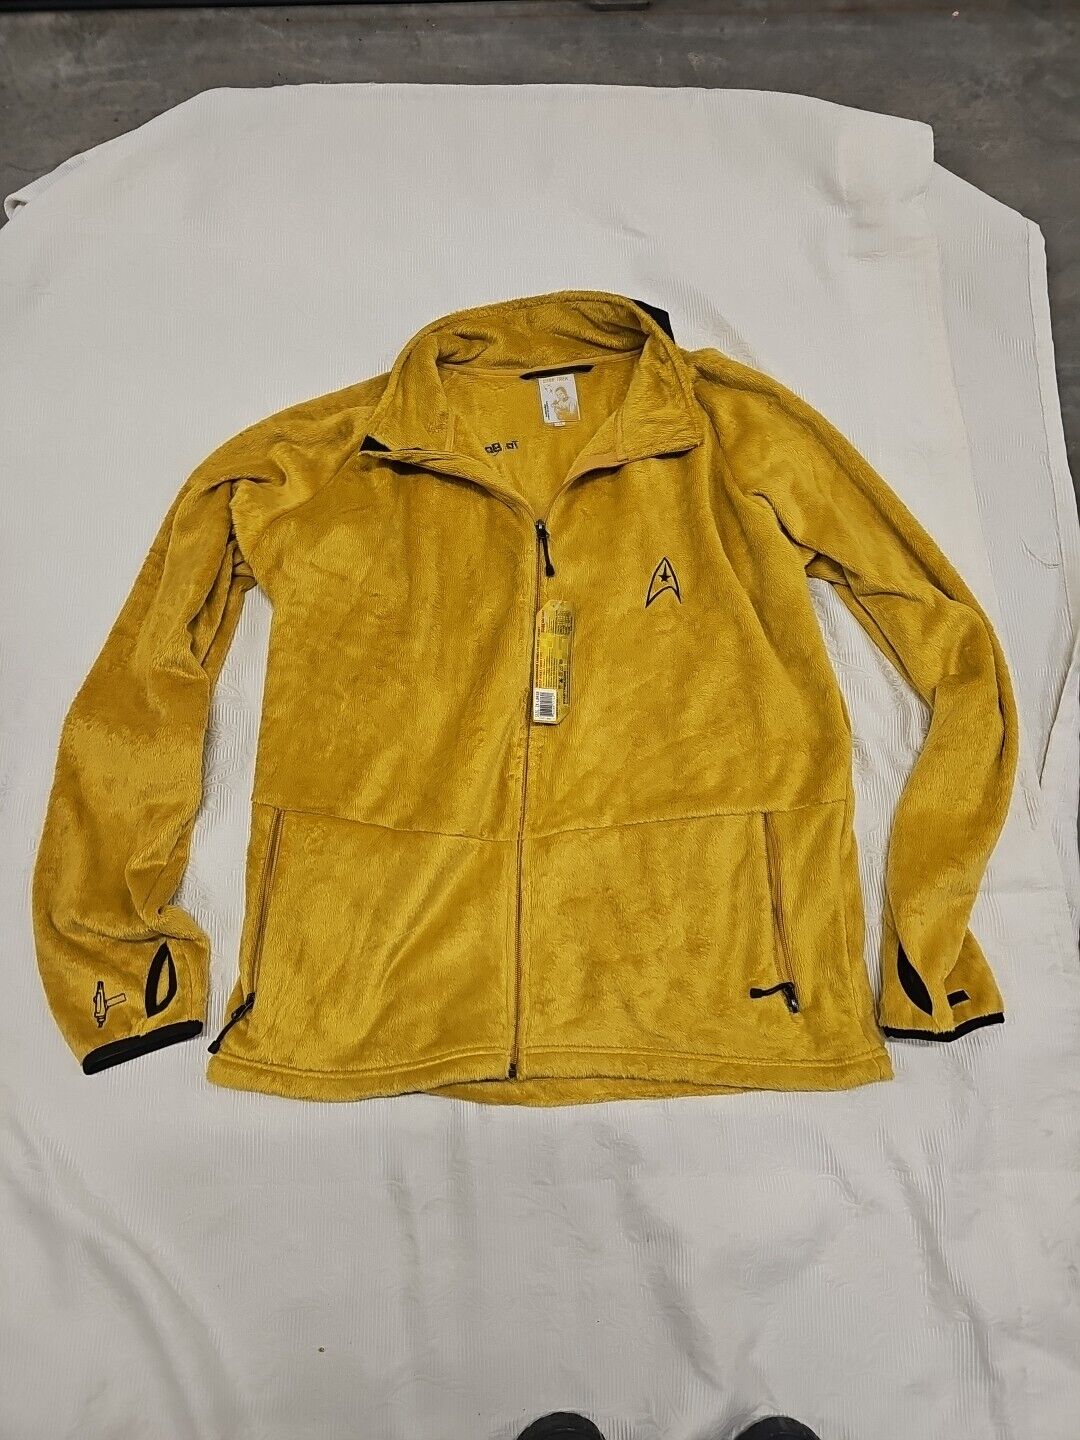 Star Trek Soft Fleece Jacket Full Zip Size 2X ~ Rare New with tags 